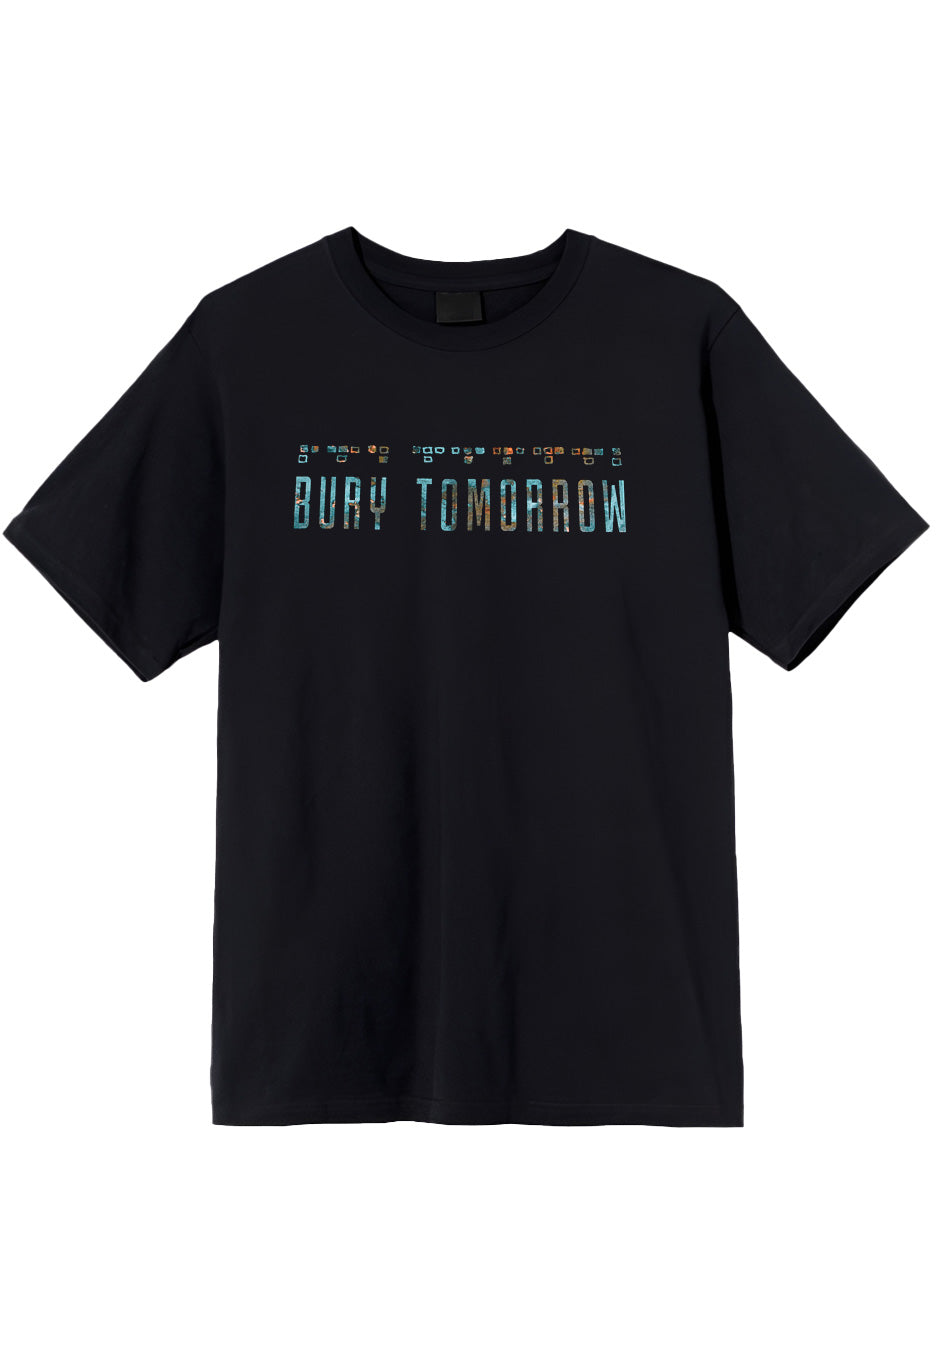 Bury Tomorrow - Abandon Us - T-Shirt